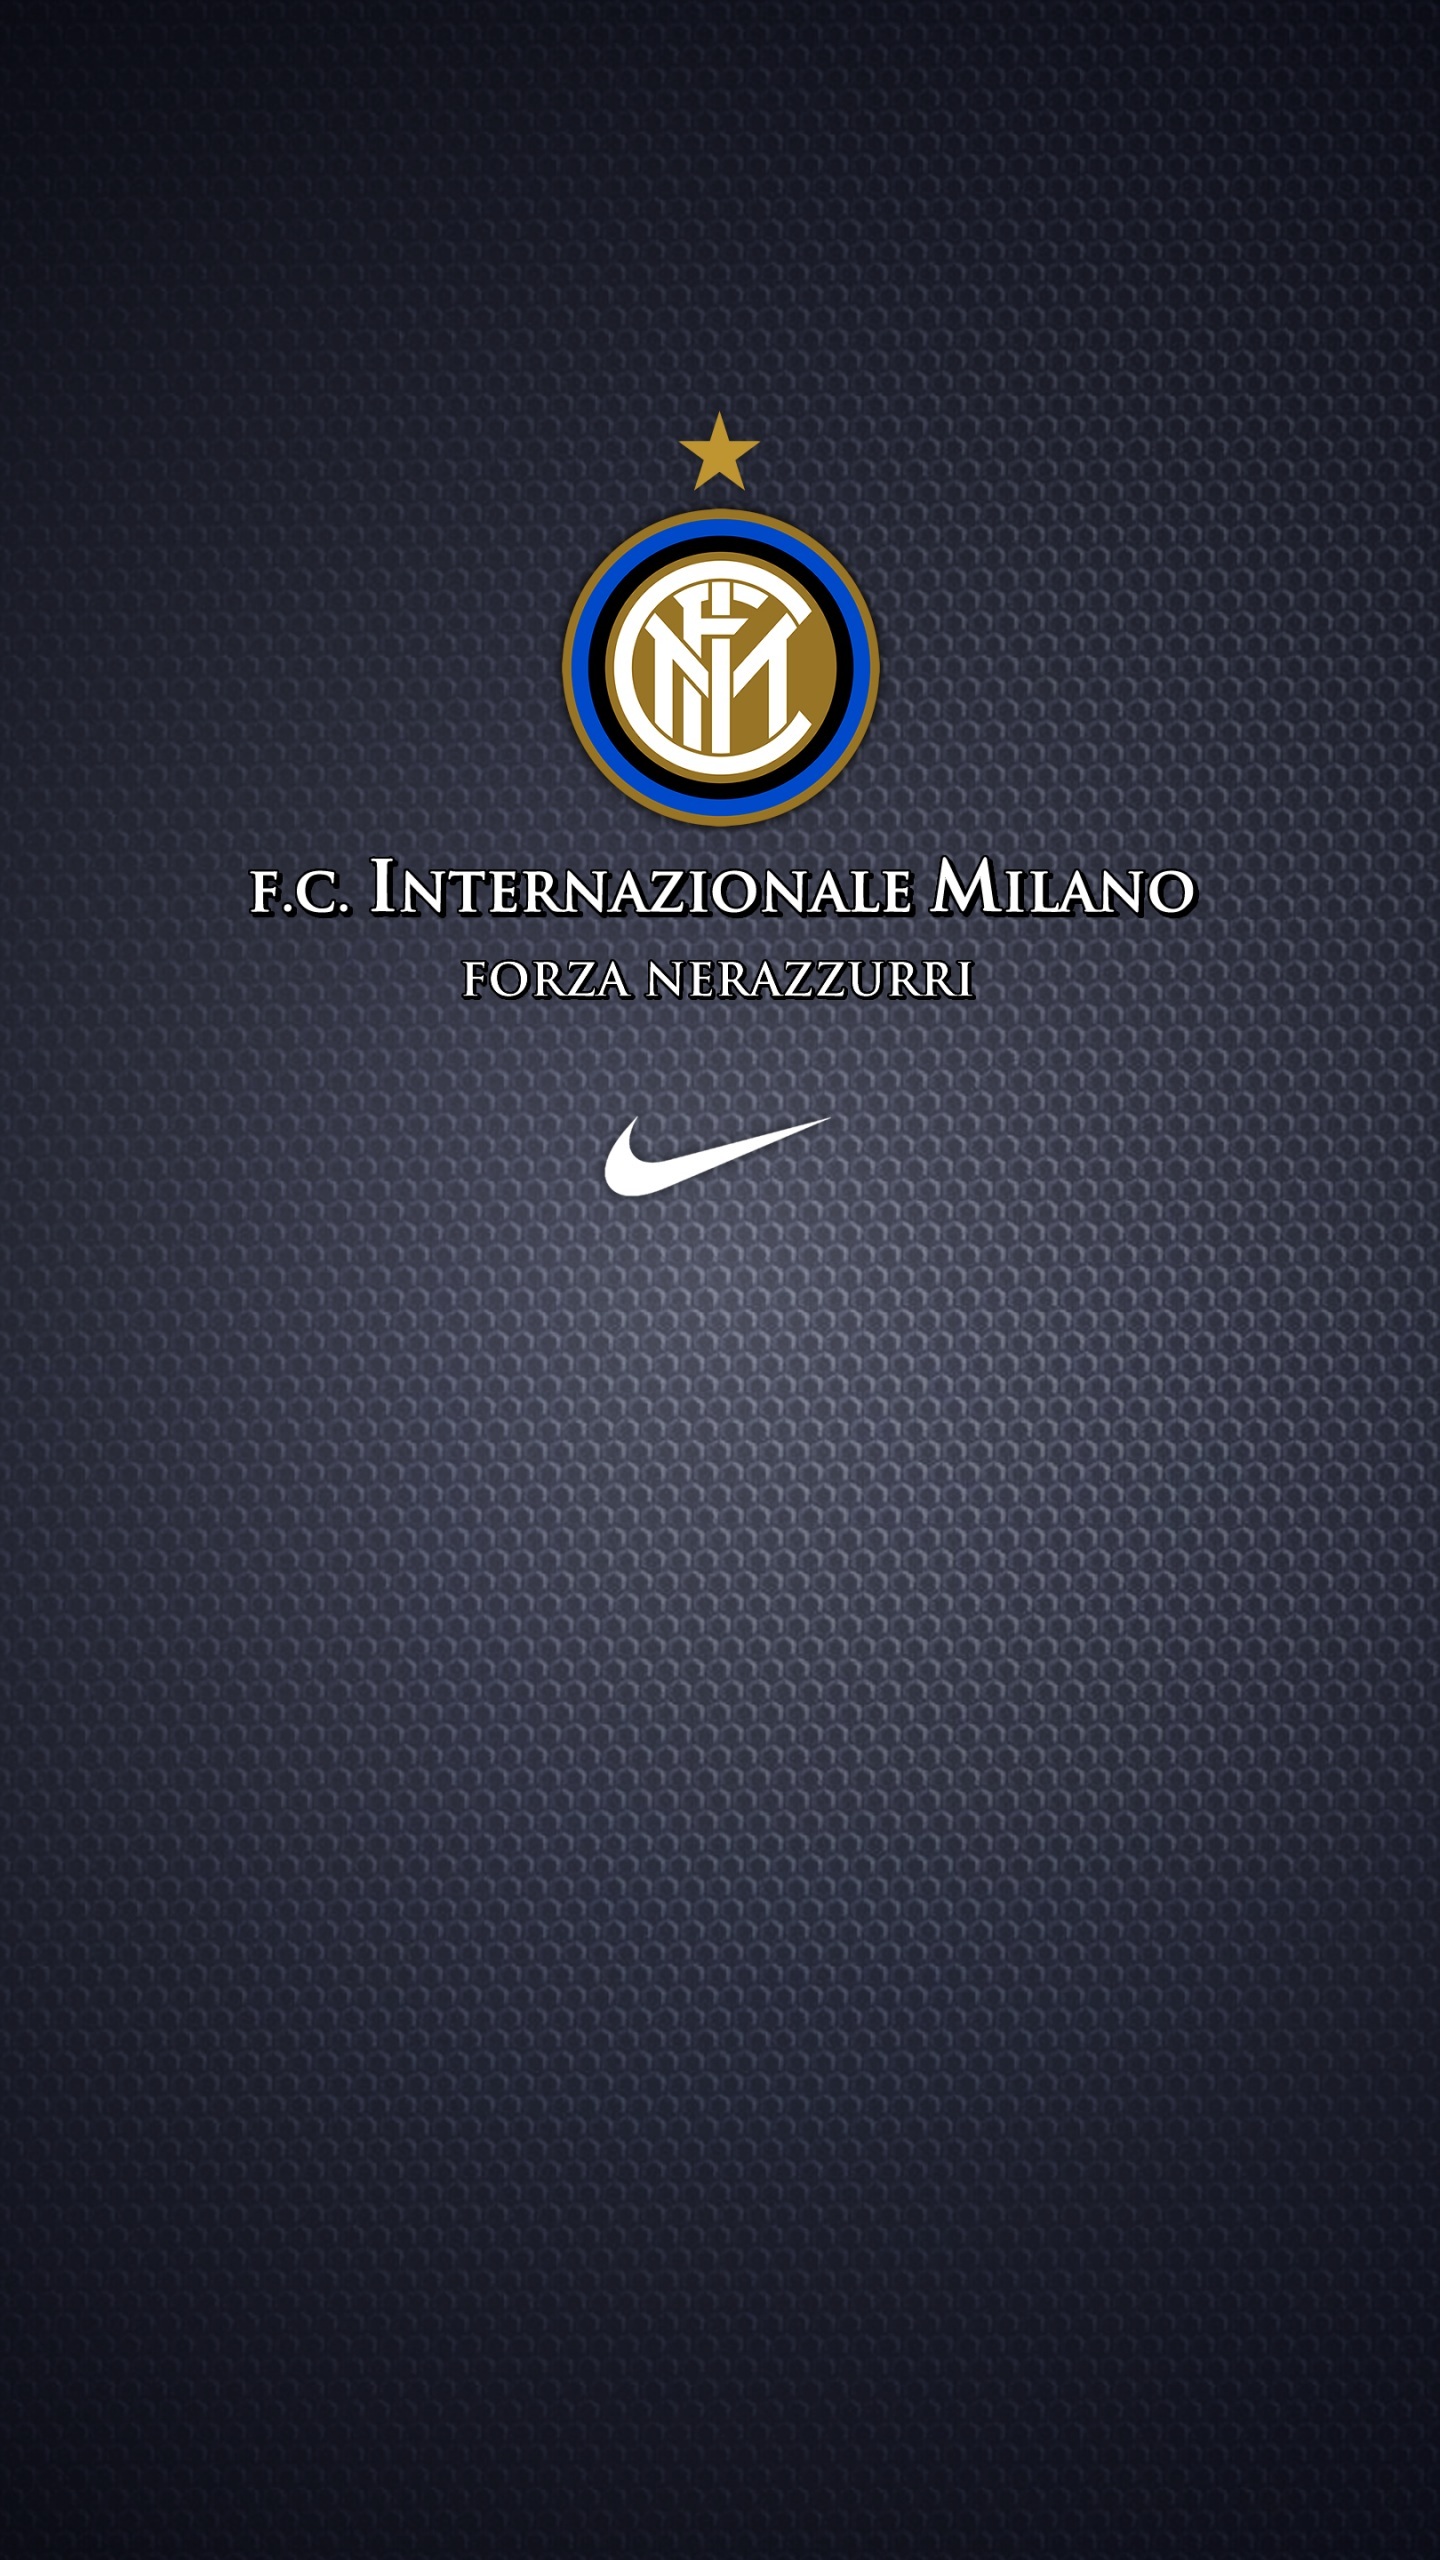 Fc Internazionale Milano Smartphone Wallpaper BygoloteHD